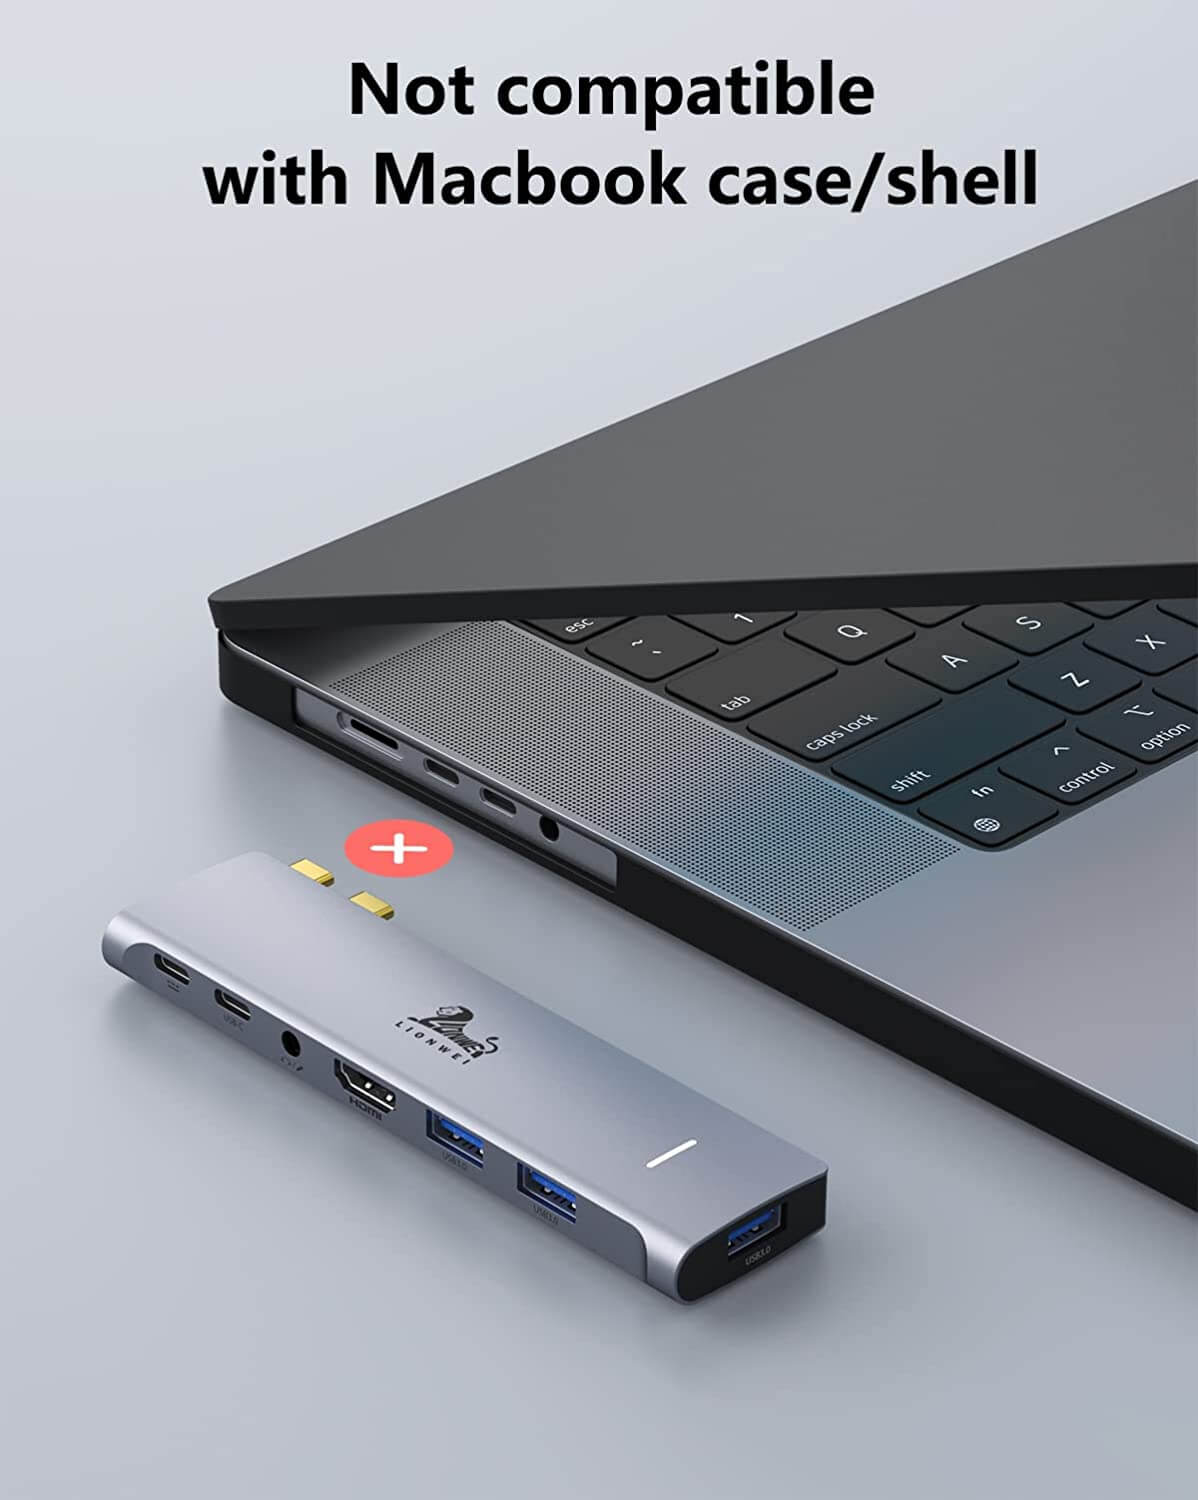 Lionwei USB C Hub Adapter for MacBook Pro/Air 7-IN-2